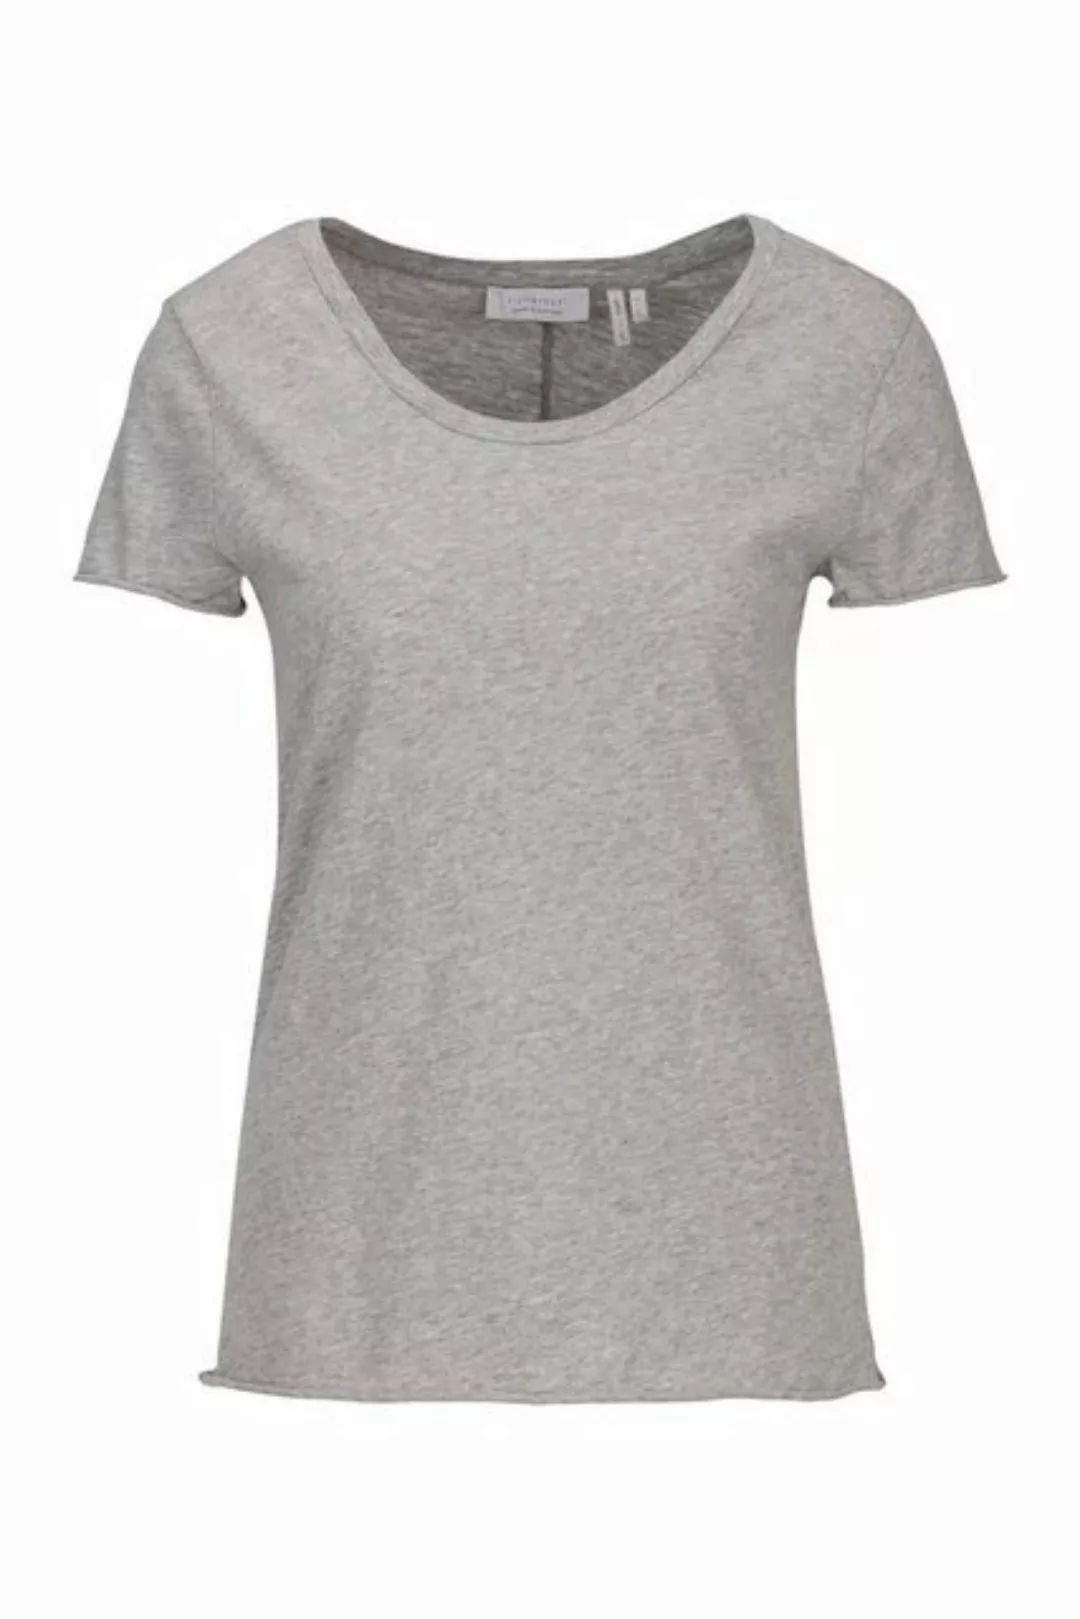 Rich & Royal T-Shirt in femininer Basic-Form günstig online kaufen